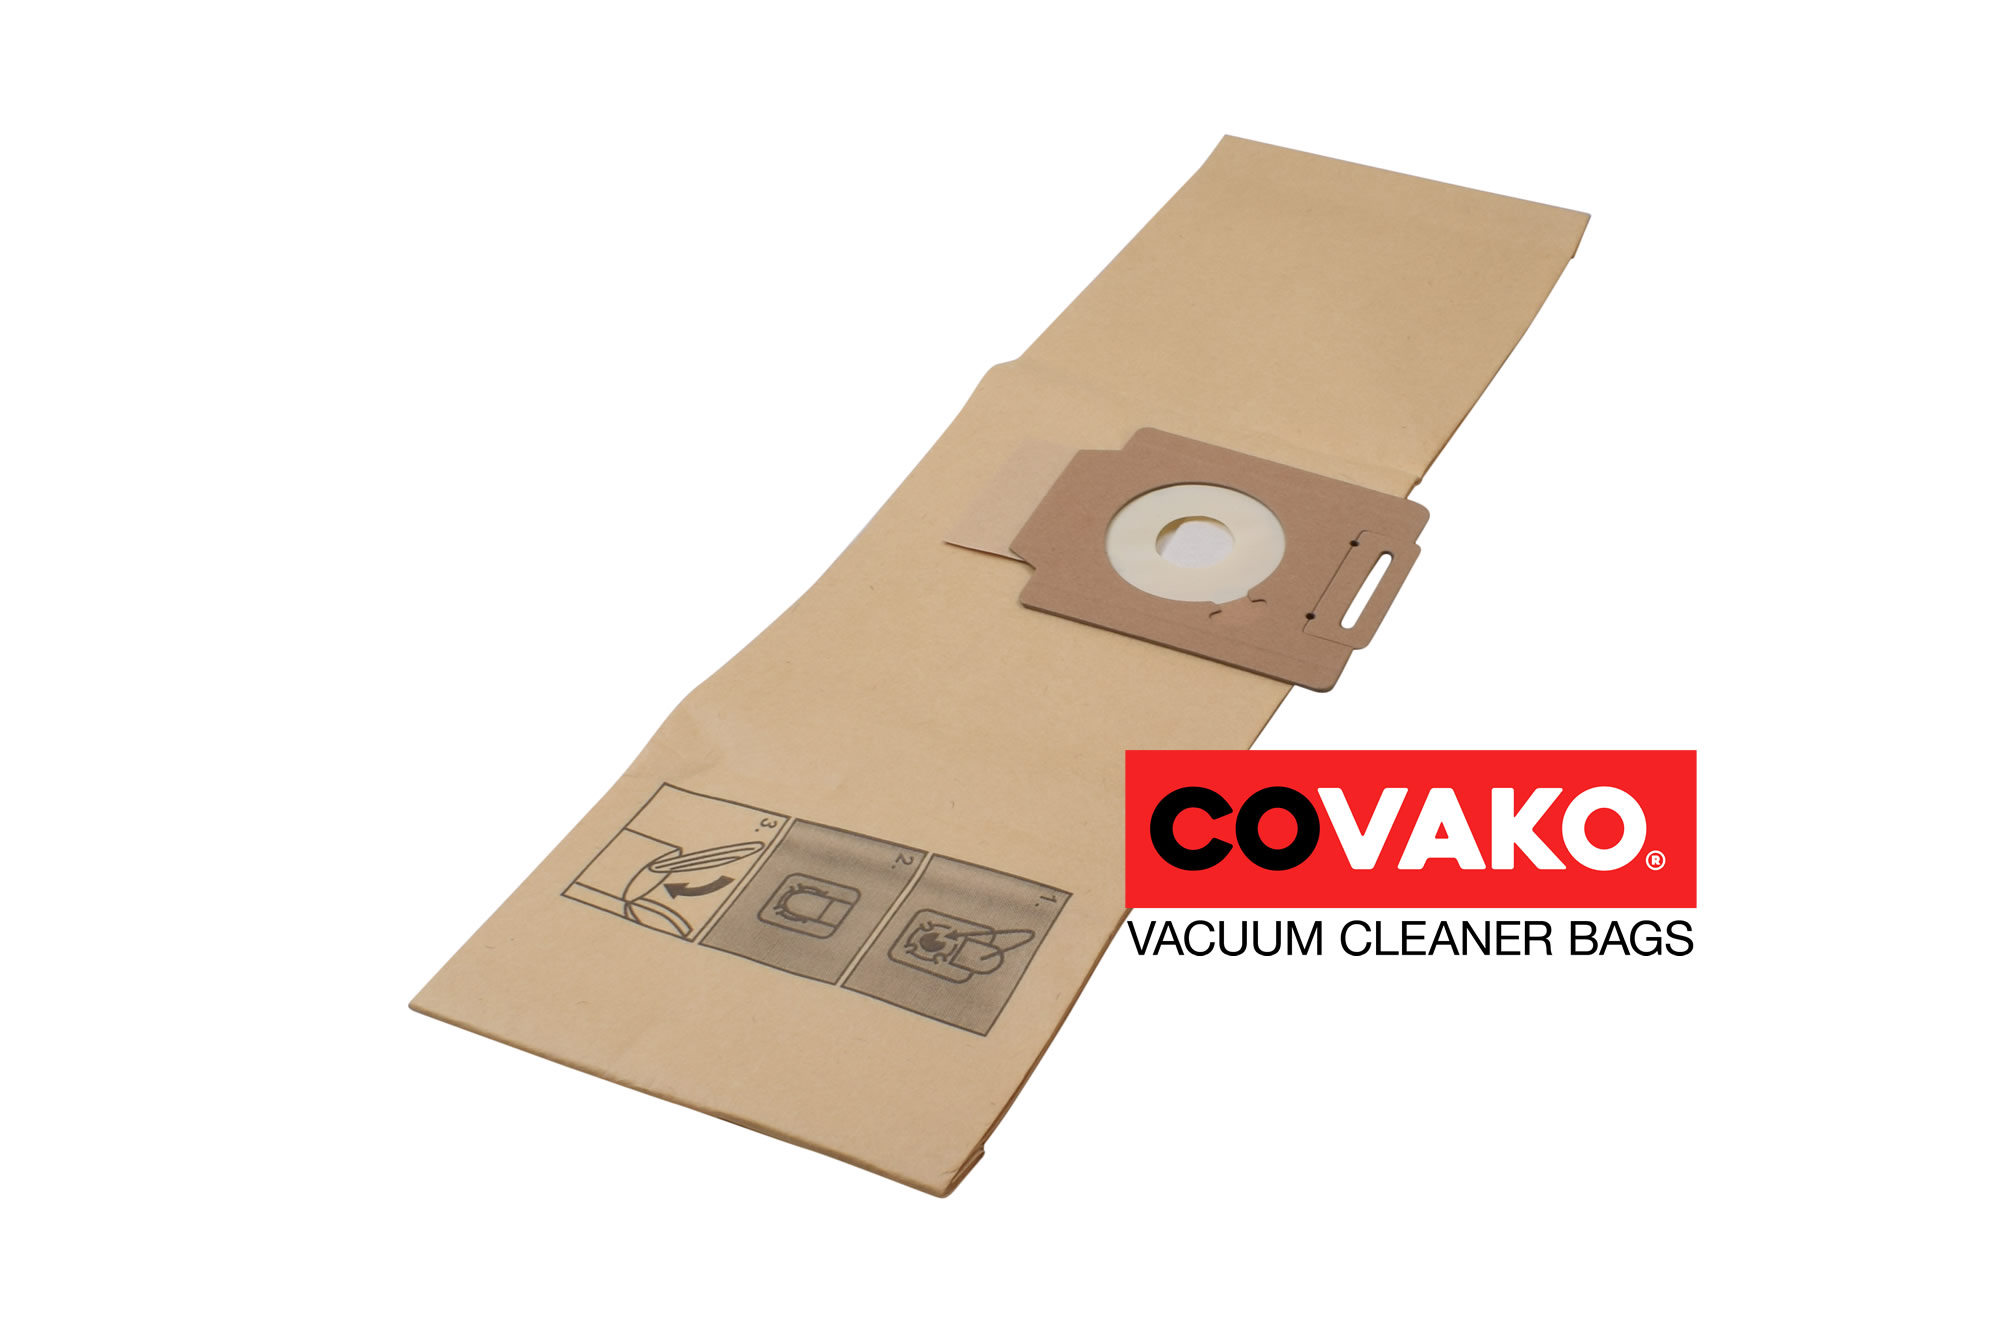 Wetrok Bantam 6 / Paper - Wetrok vacuum cleaner bags